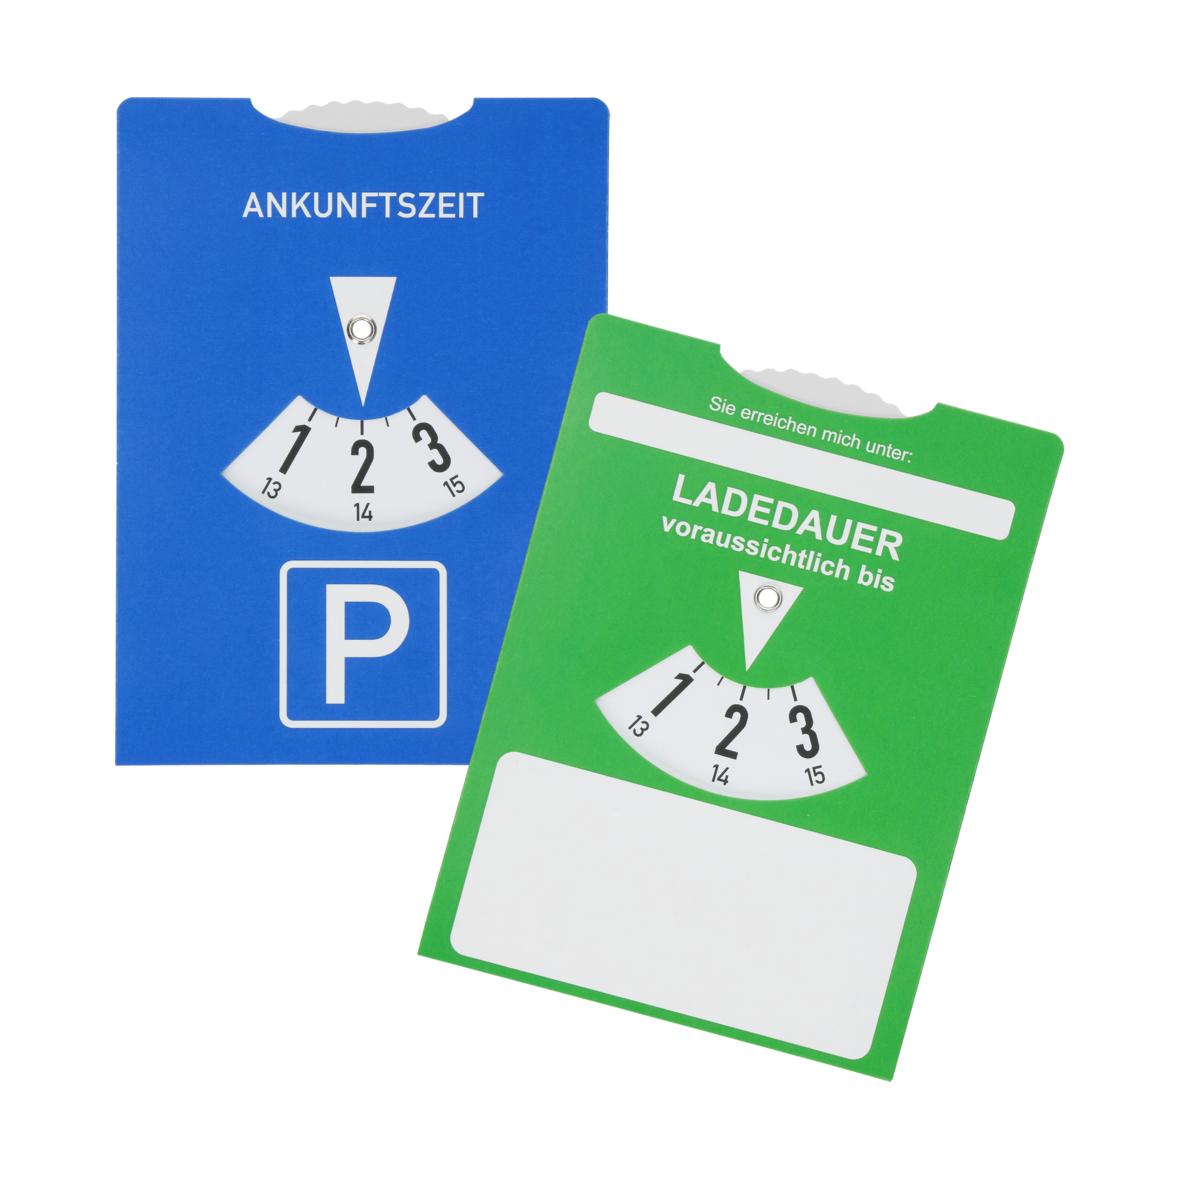 Cardboard parking disk E-Mobility, blue/green-01905503-00000